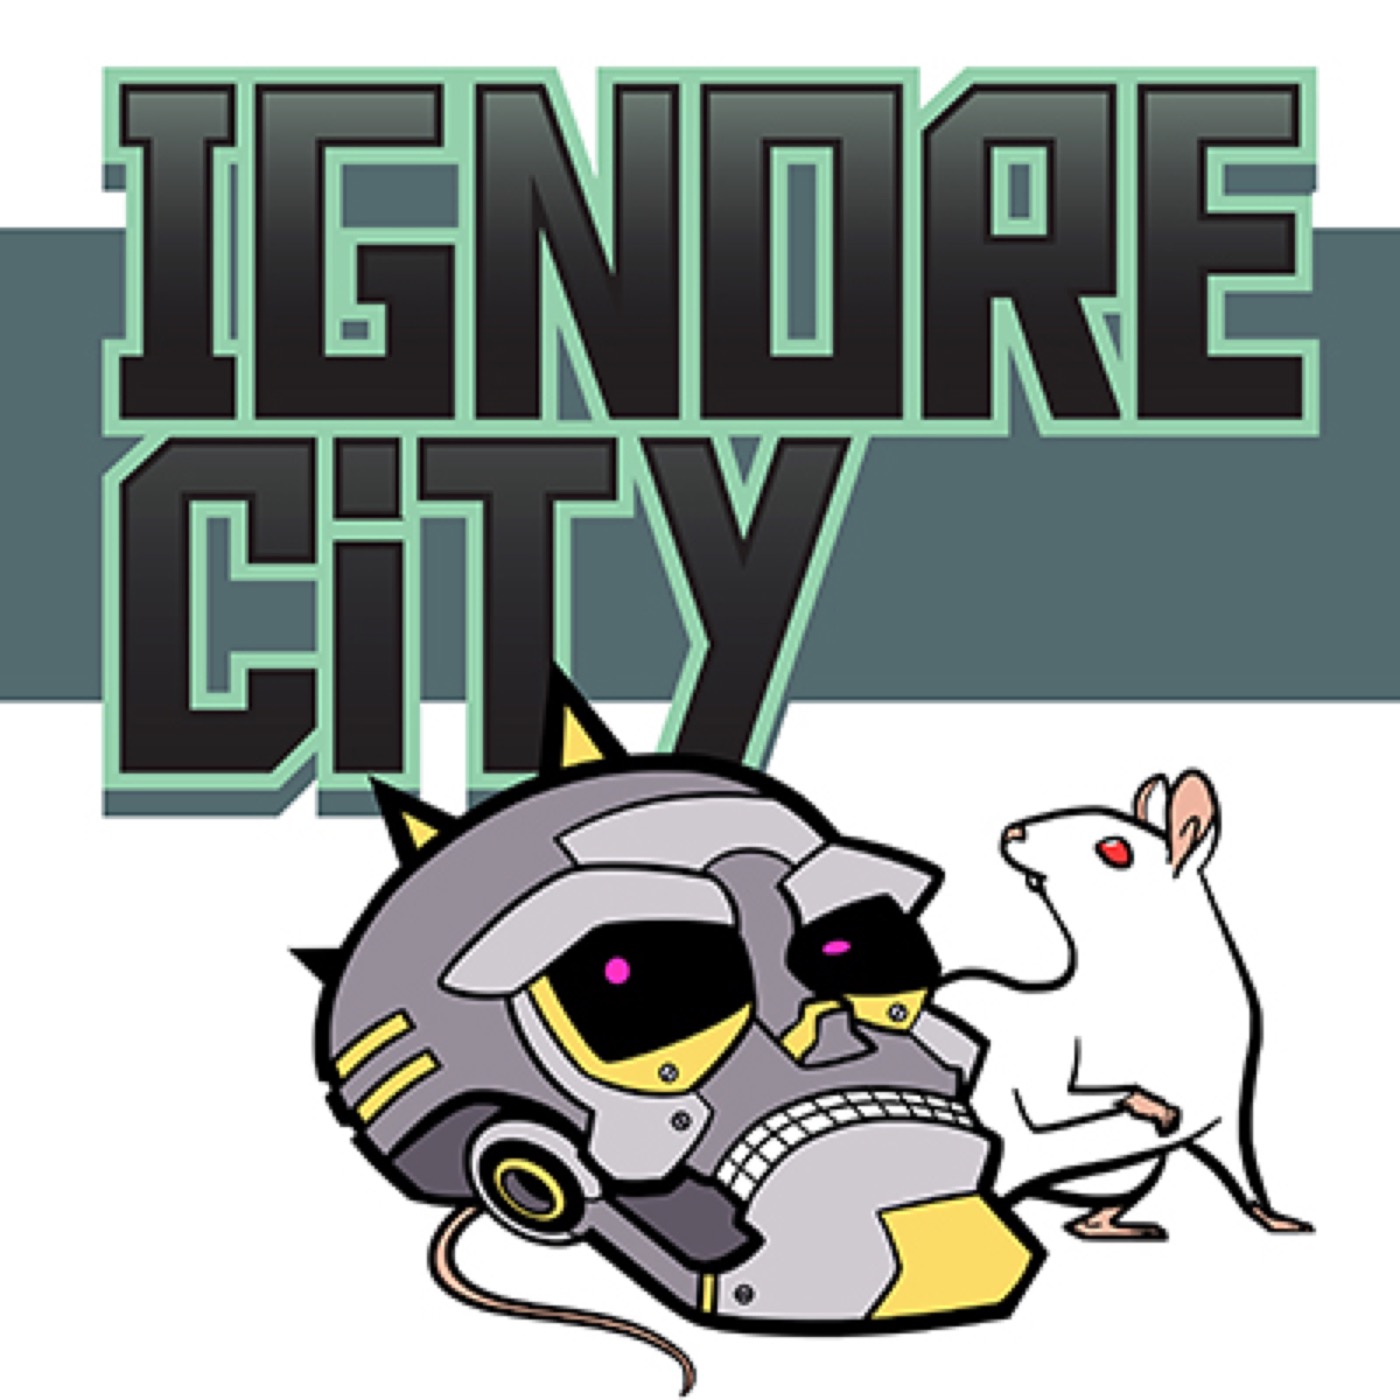 Ignore City 1: Talking Robot Head